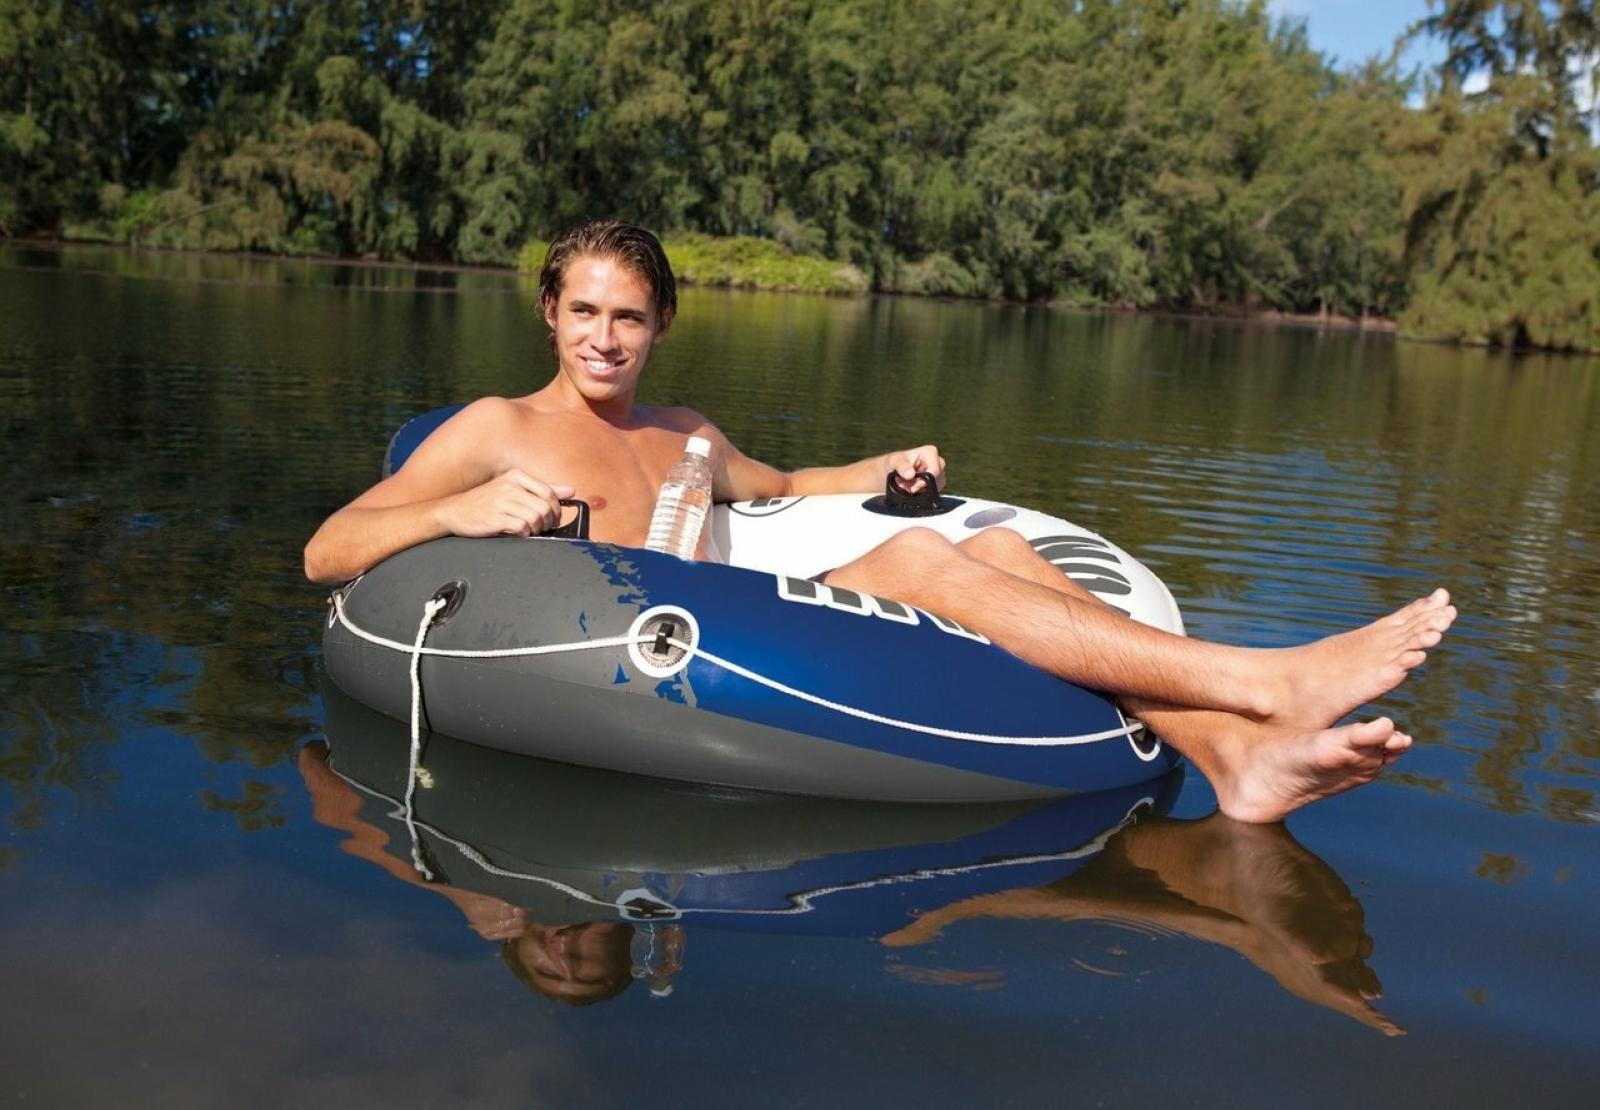 Intex River Run 1 Inflatable Floating Lake Tube